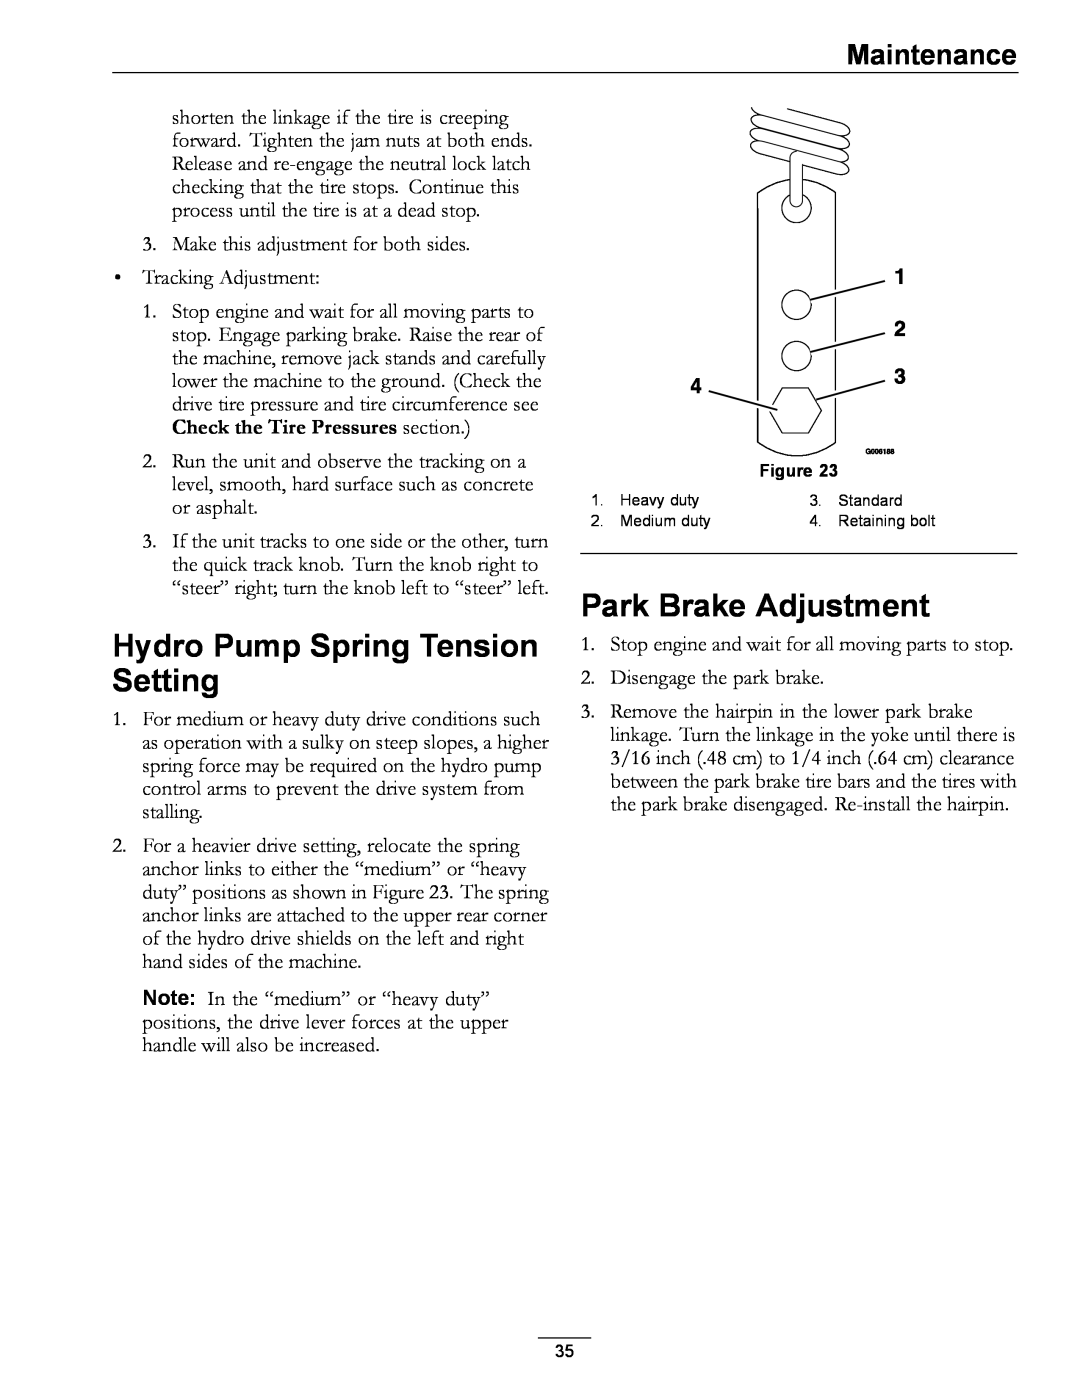 Exmark 4500-355 manual Hydro Pump Spring Tension Setting, Park Brake Adjustment, Maintenance 